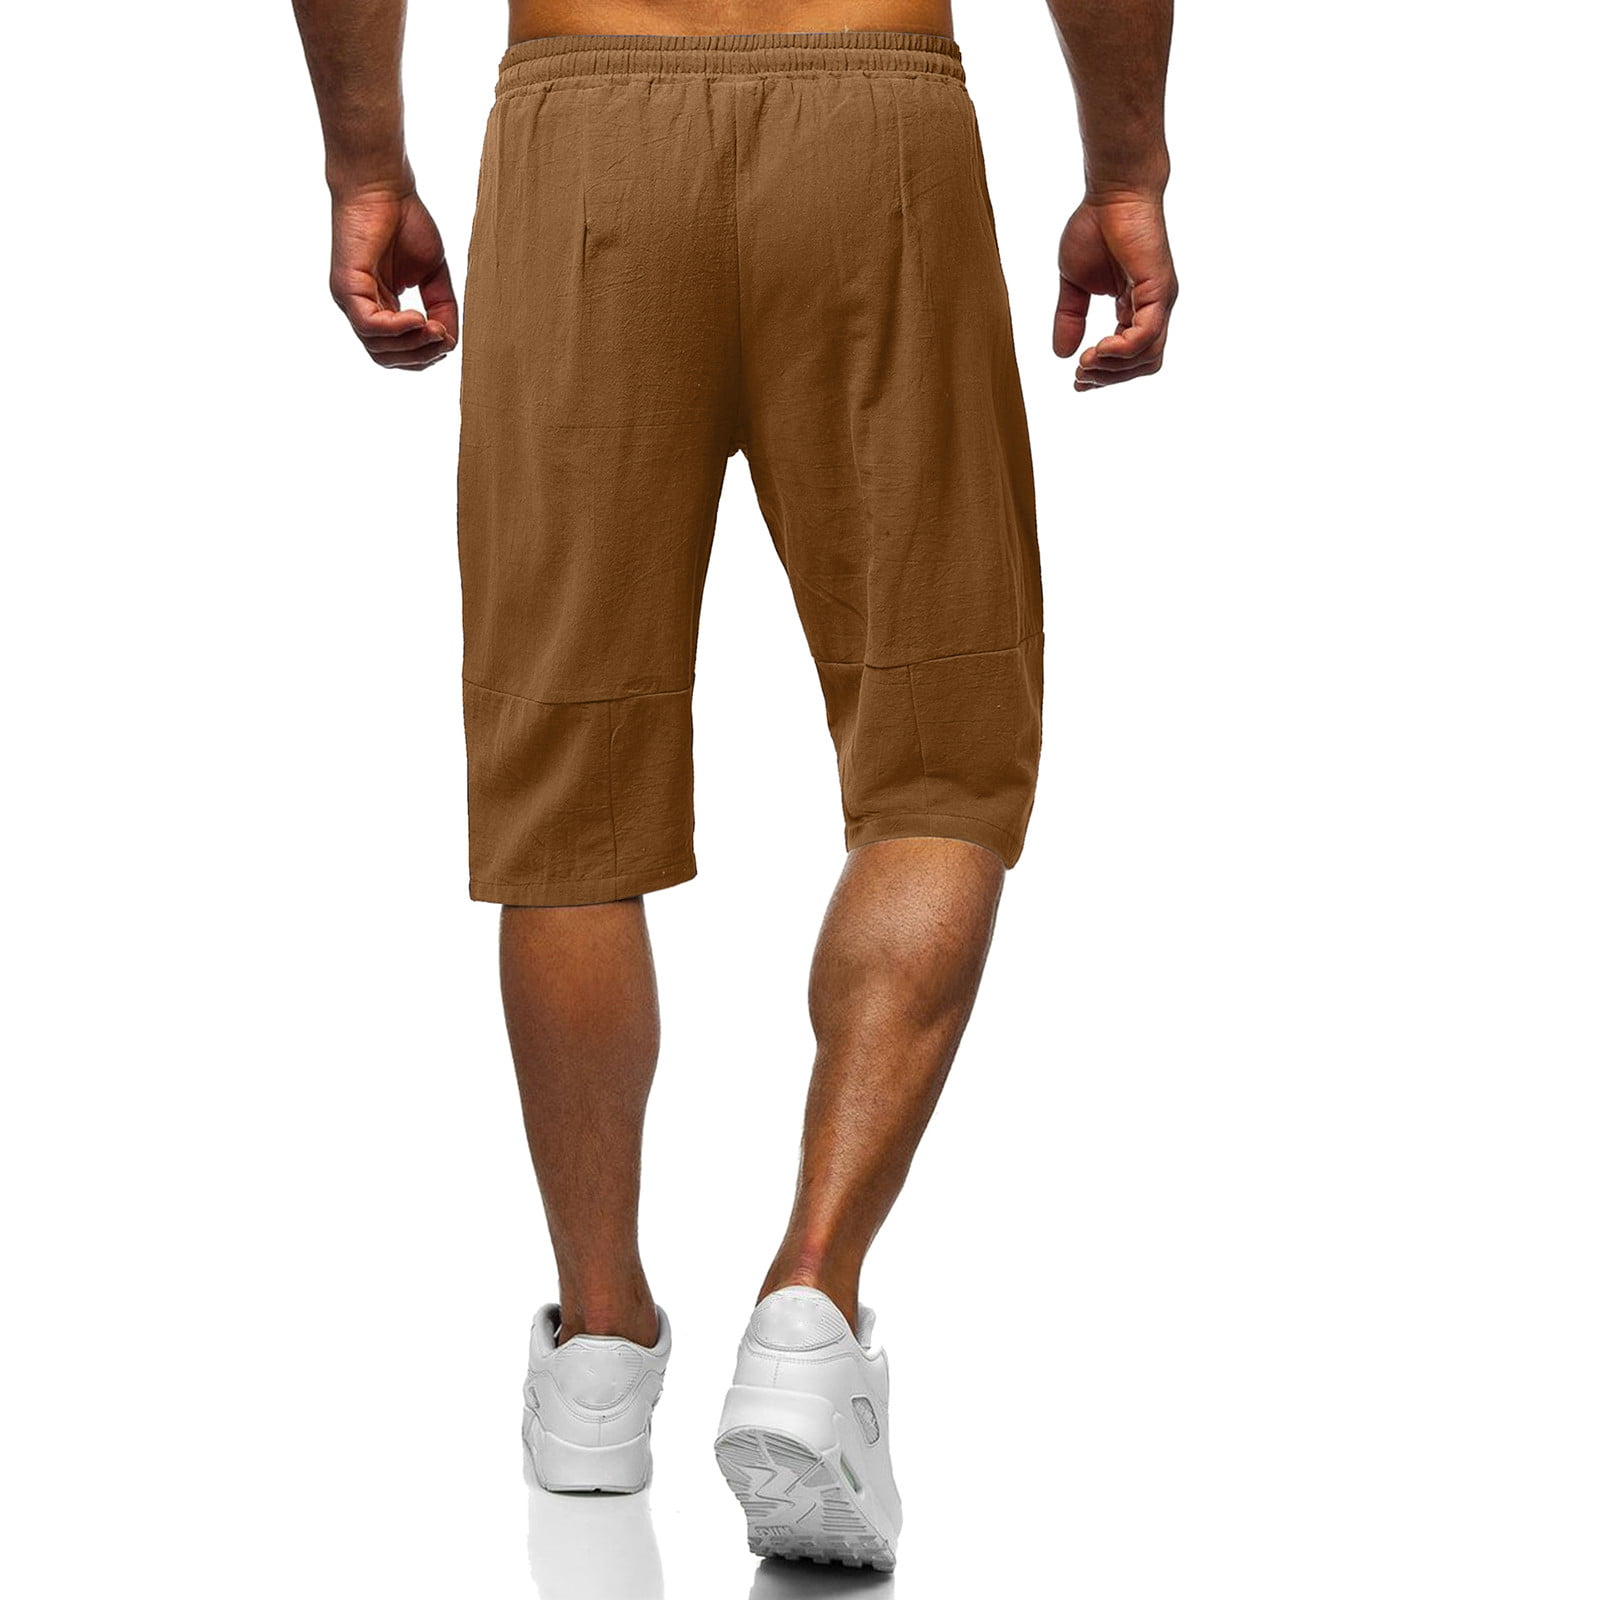 COOFANDY Mens Yoga Beach Shorts Cool Stretchy Drawstring Waistband Lounge Shorts 